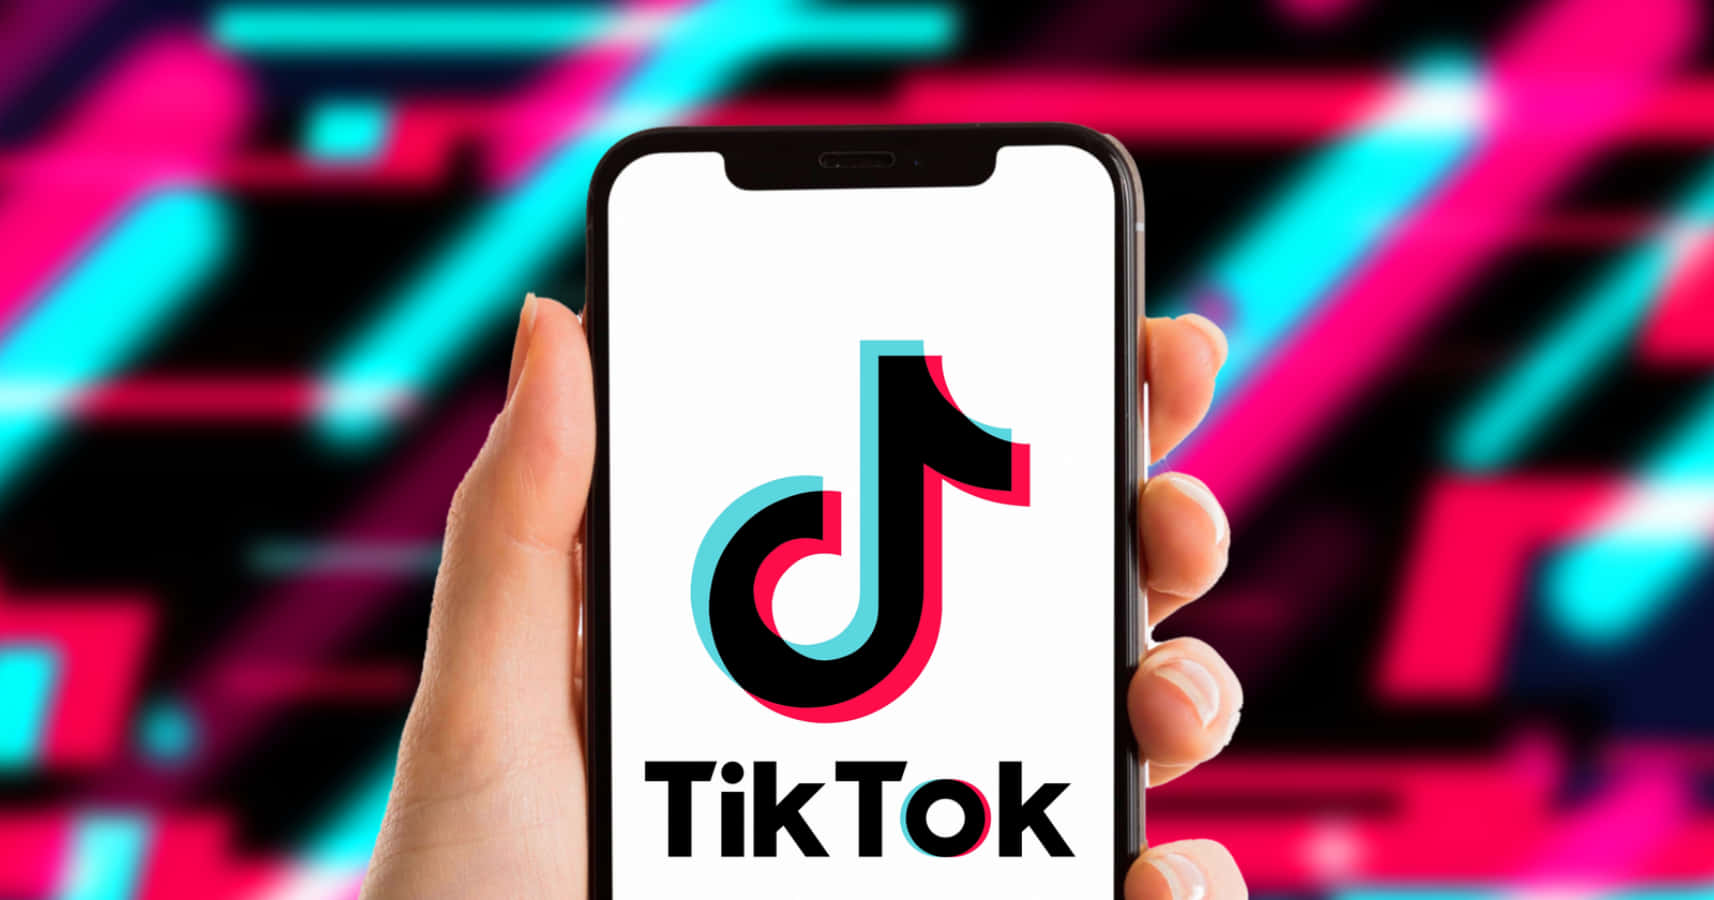 Get creative and have fun on TikTok!